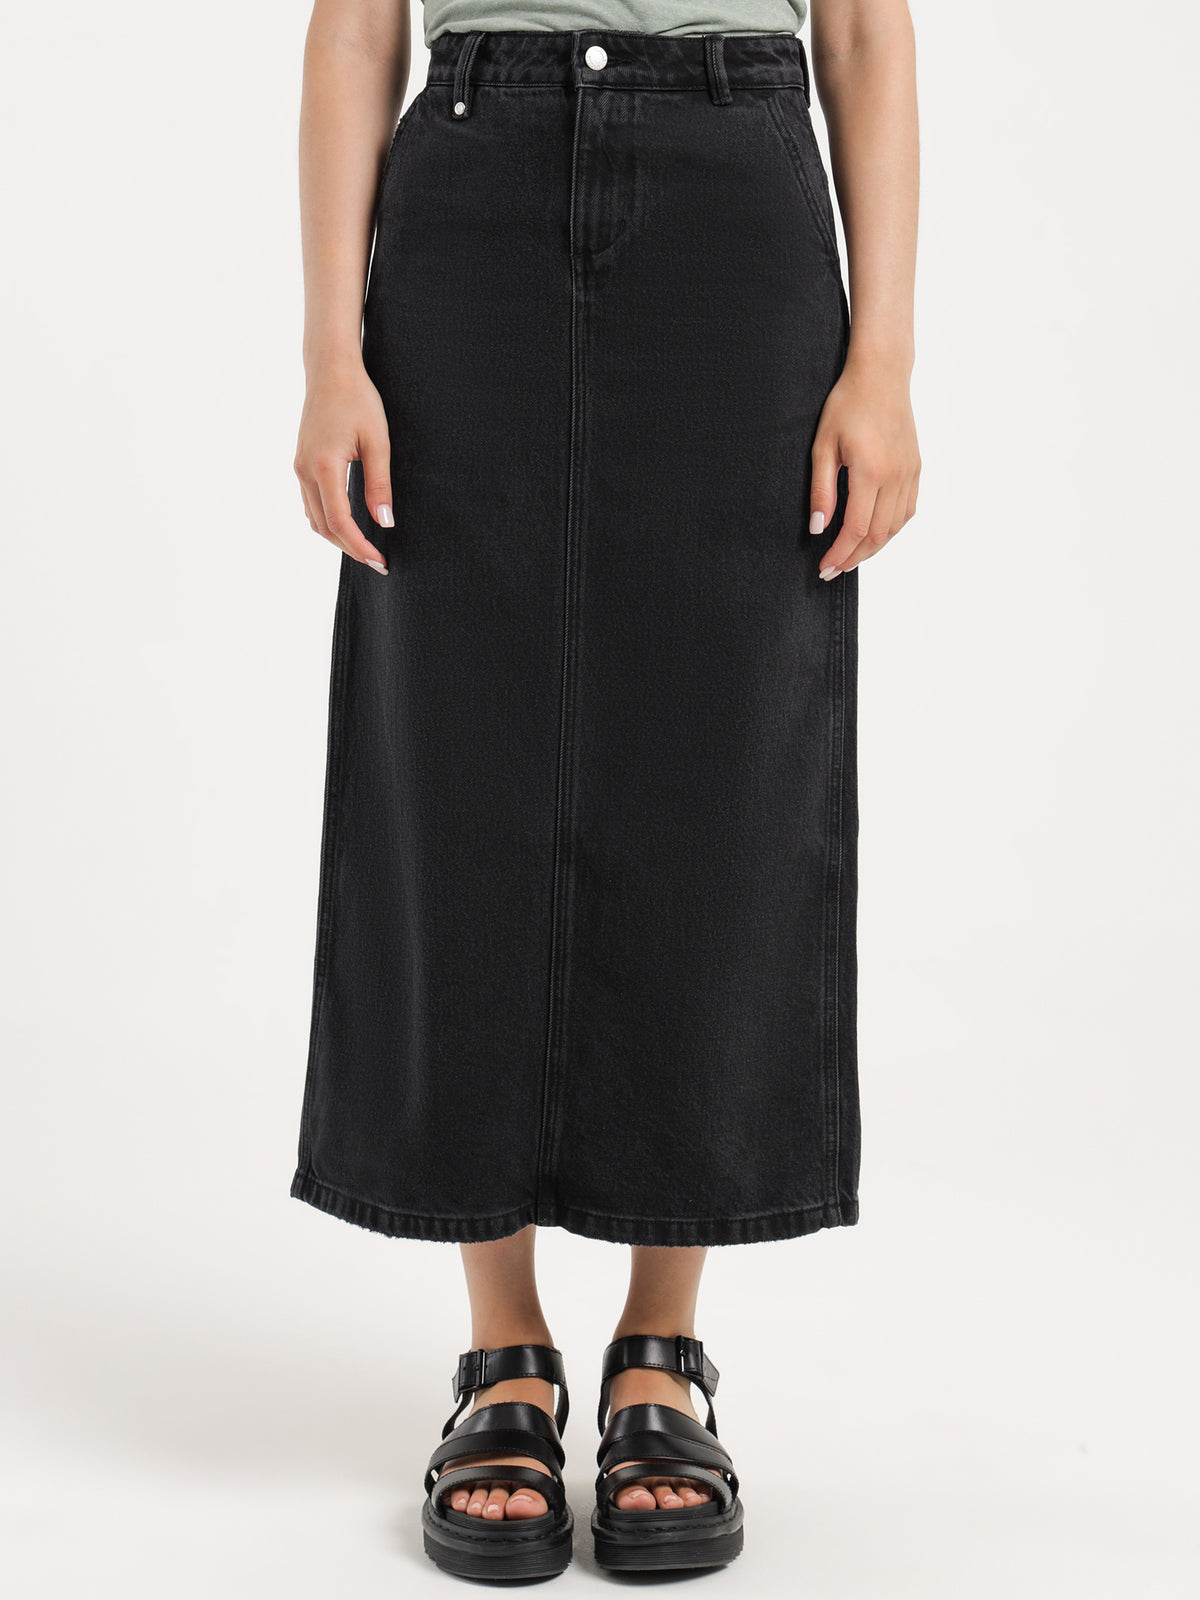 Fran Maxi Denim Skirt in Aged Black